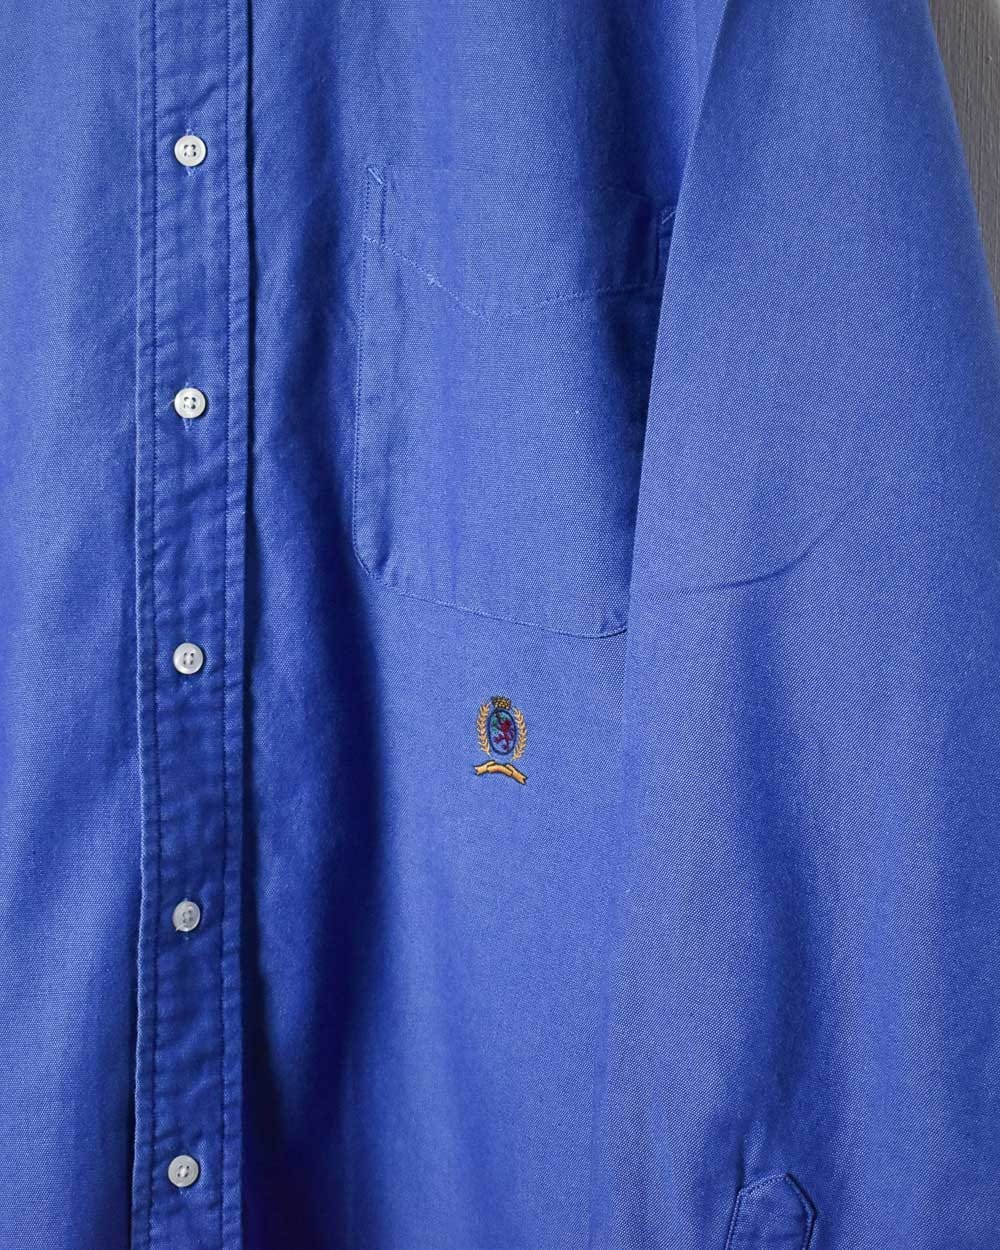 Blue Tommy Hilfiger Shirt - X-Large